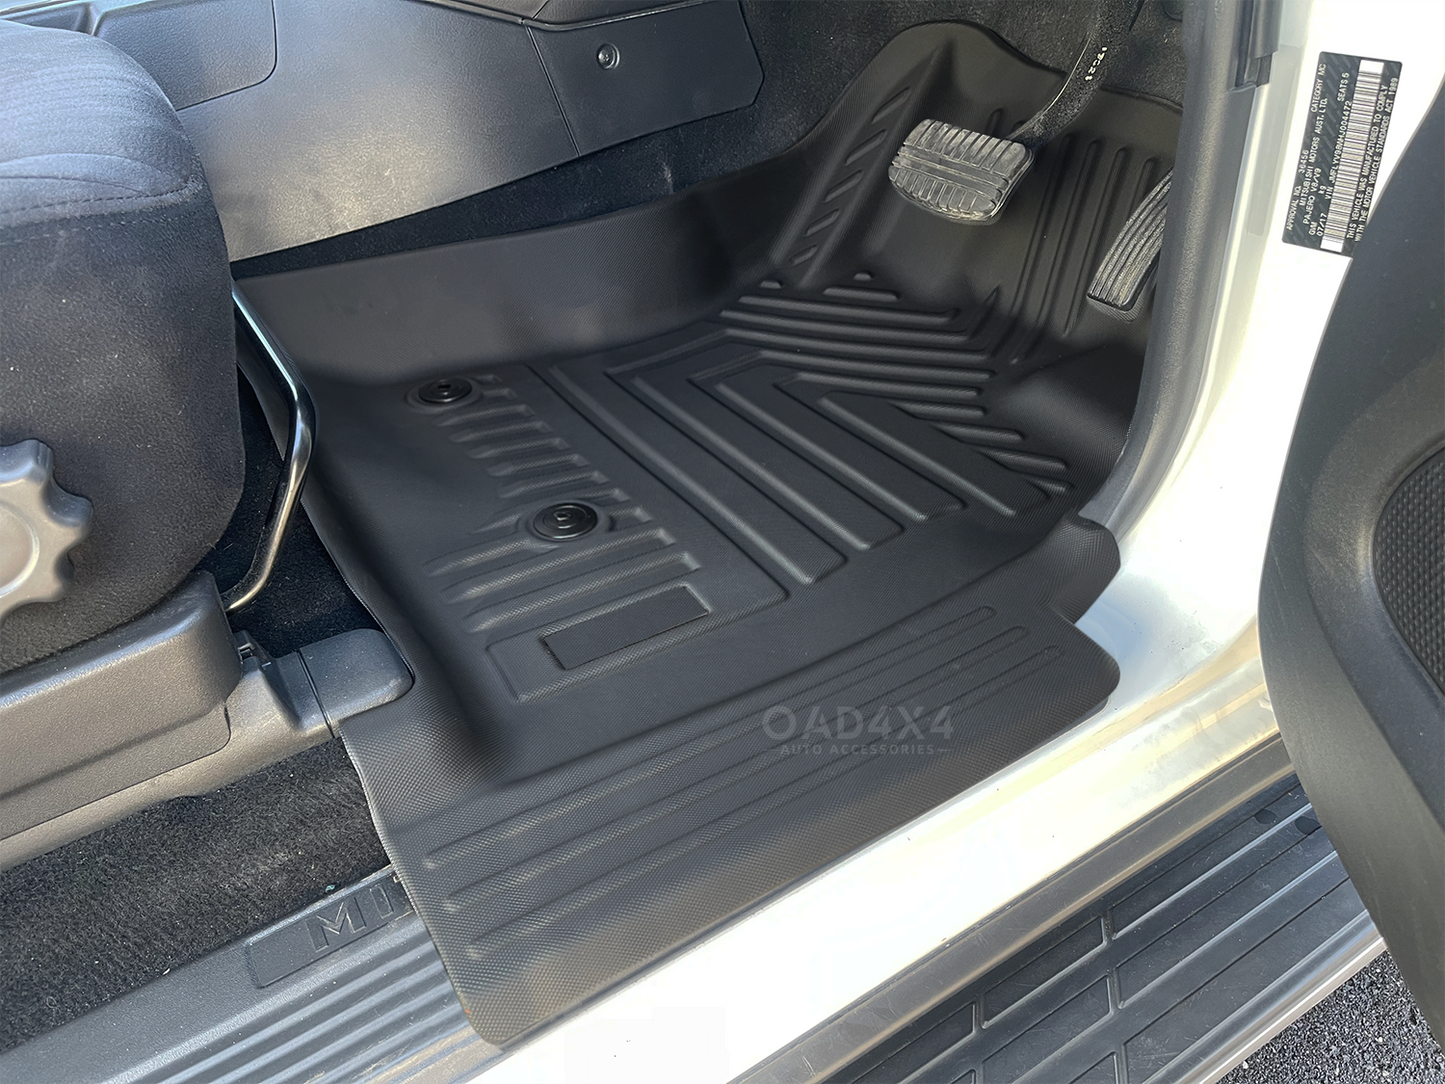 5D TPE Floor Mats for Mitsubishi Pajero 2000-Onwards Tailored Door Sill Covered Car Floor Mat Liner Car Mats